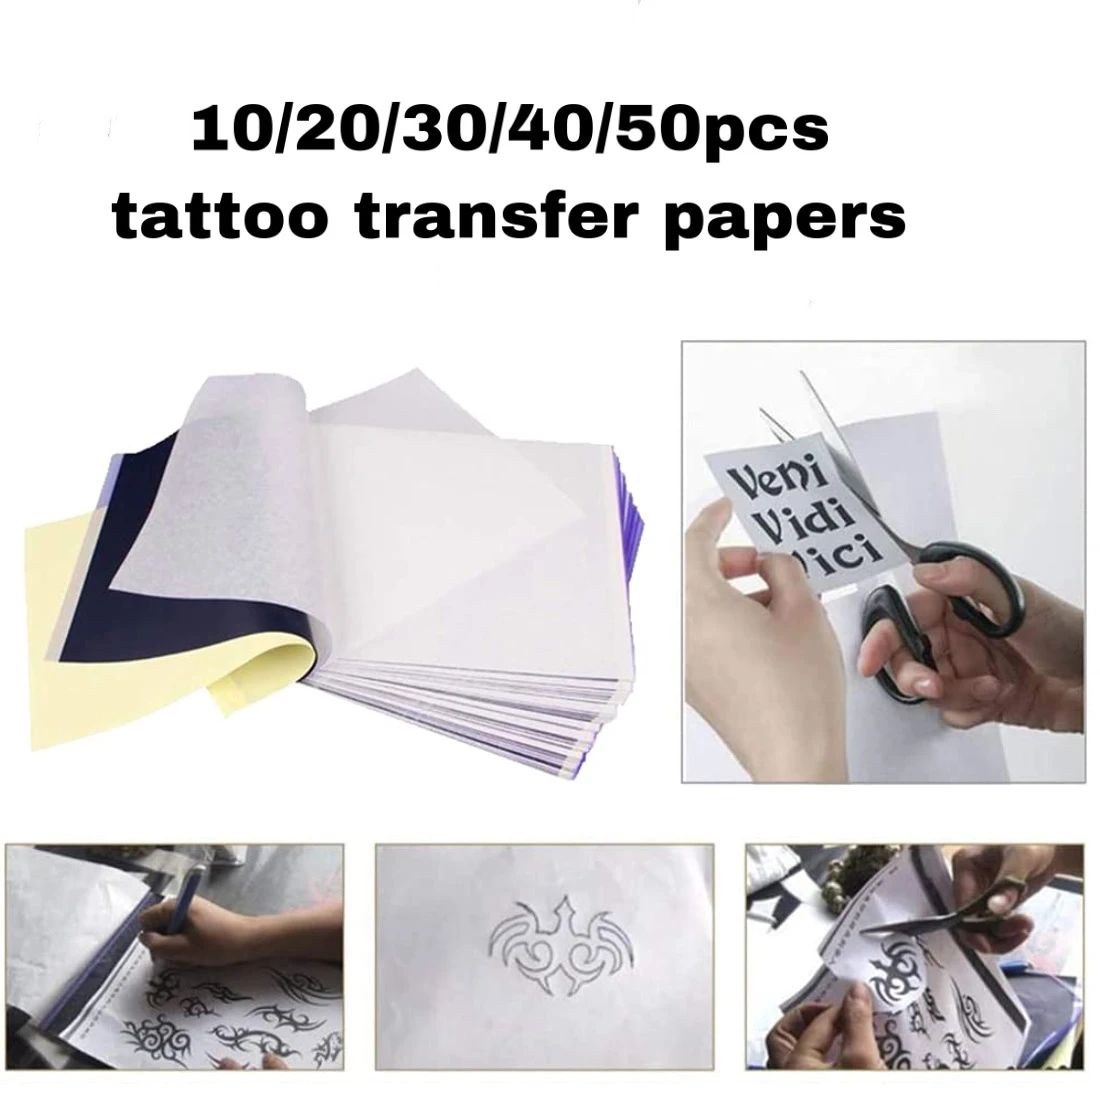 Tattoo Transfer Paper A4 Size Tattoo Practice Thermal Copier Stencil Papers Tattoo  Machine Paper Accessories|Tattoo Stencils| - AliExpress